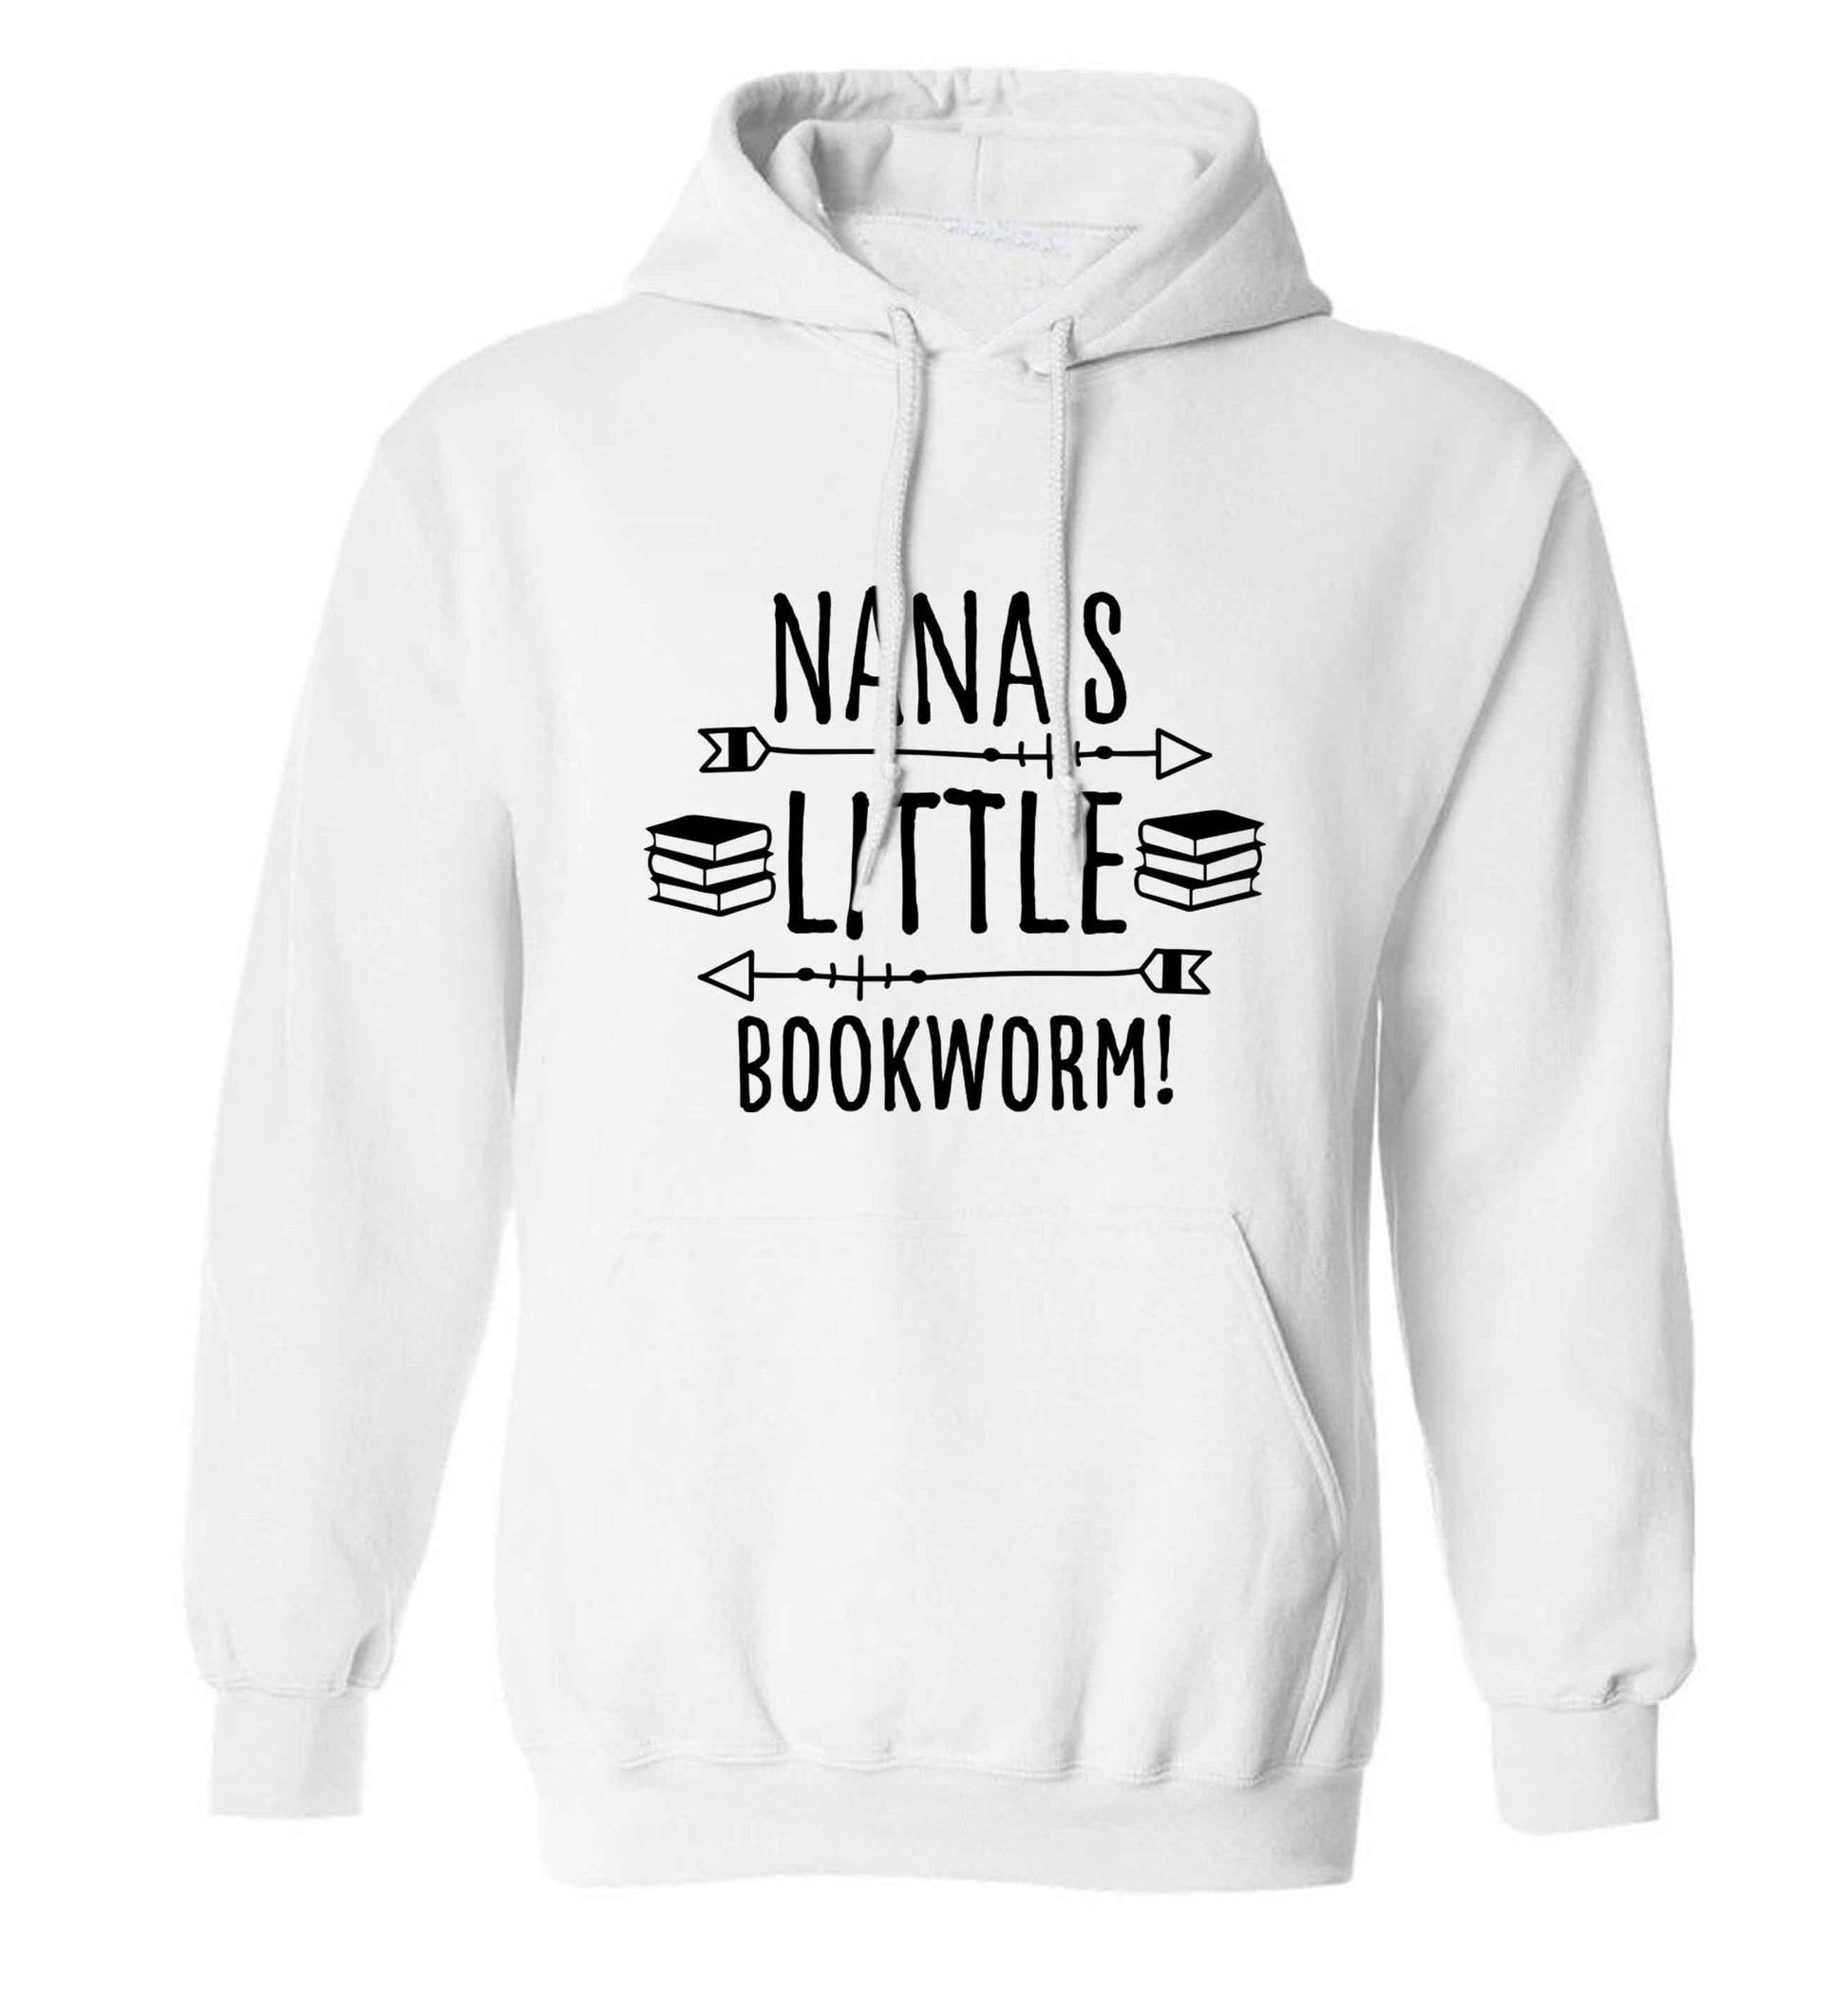 Nana's little bookworm adults unisex white hoodie 2XL